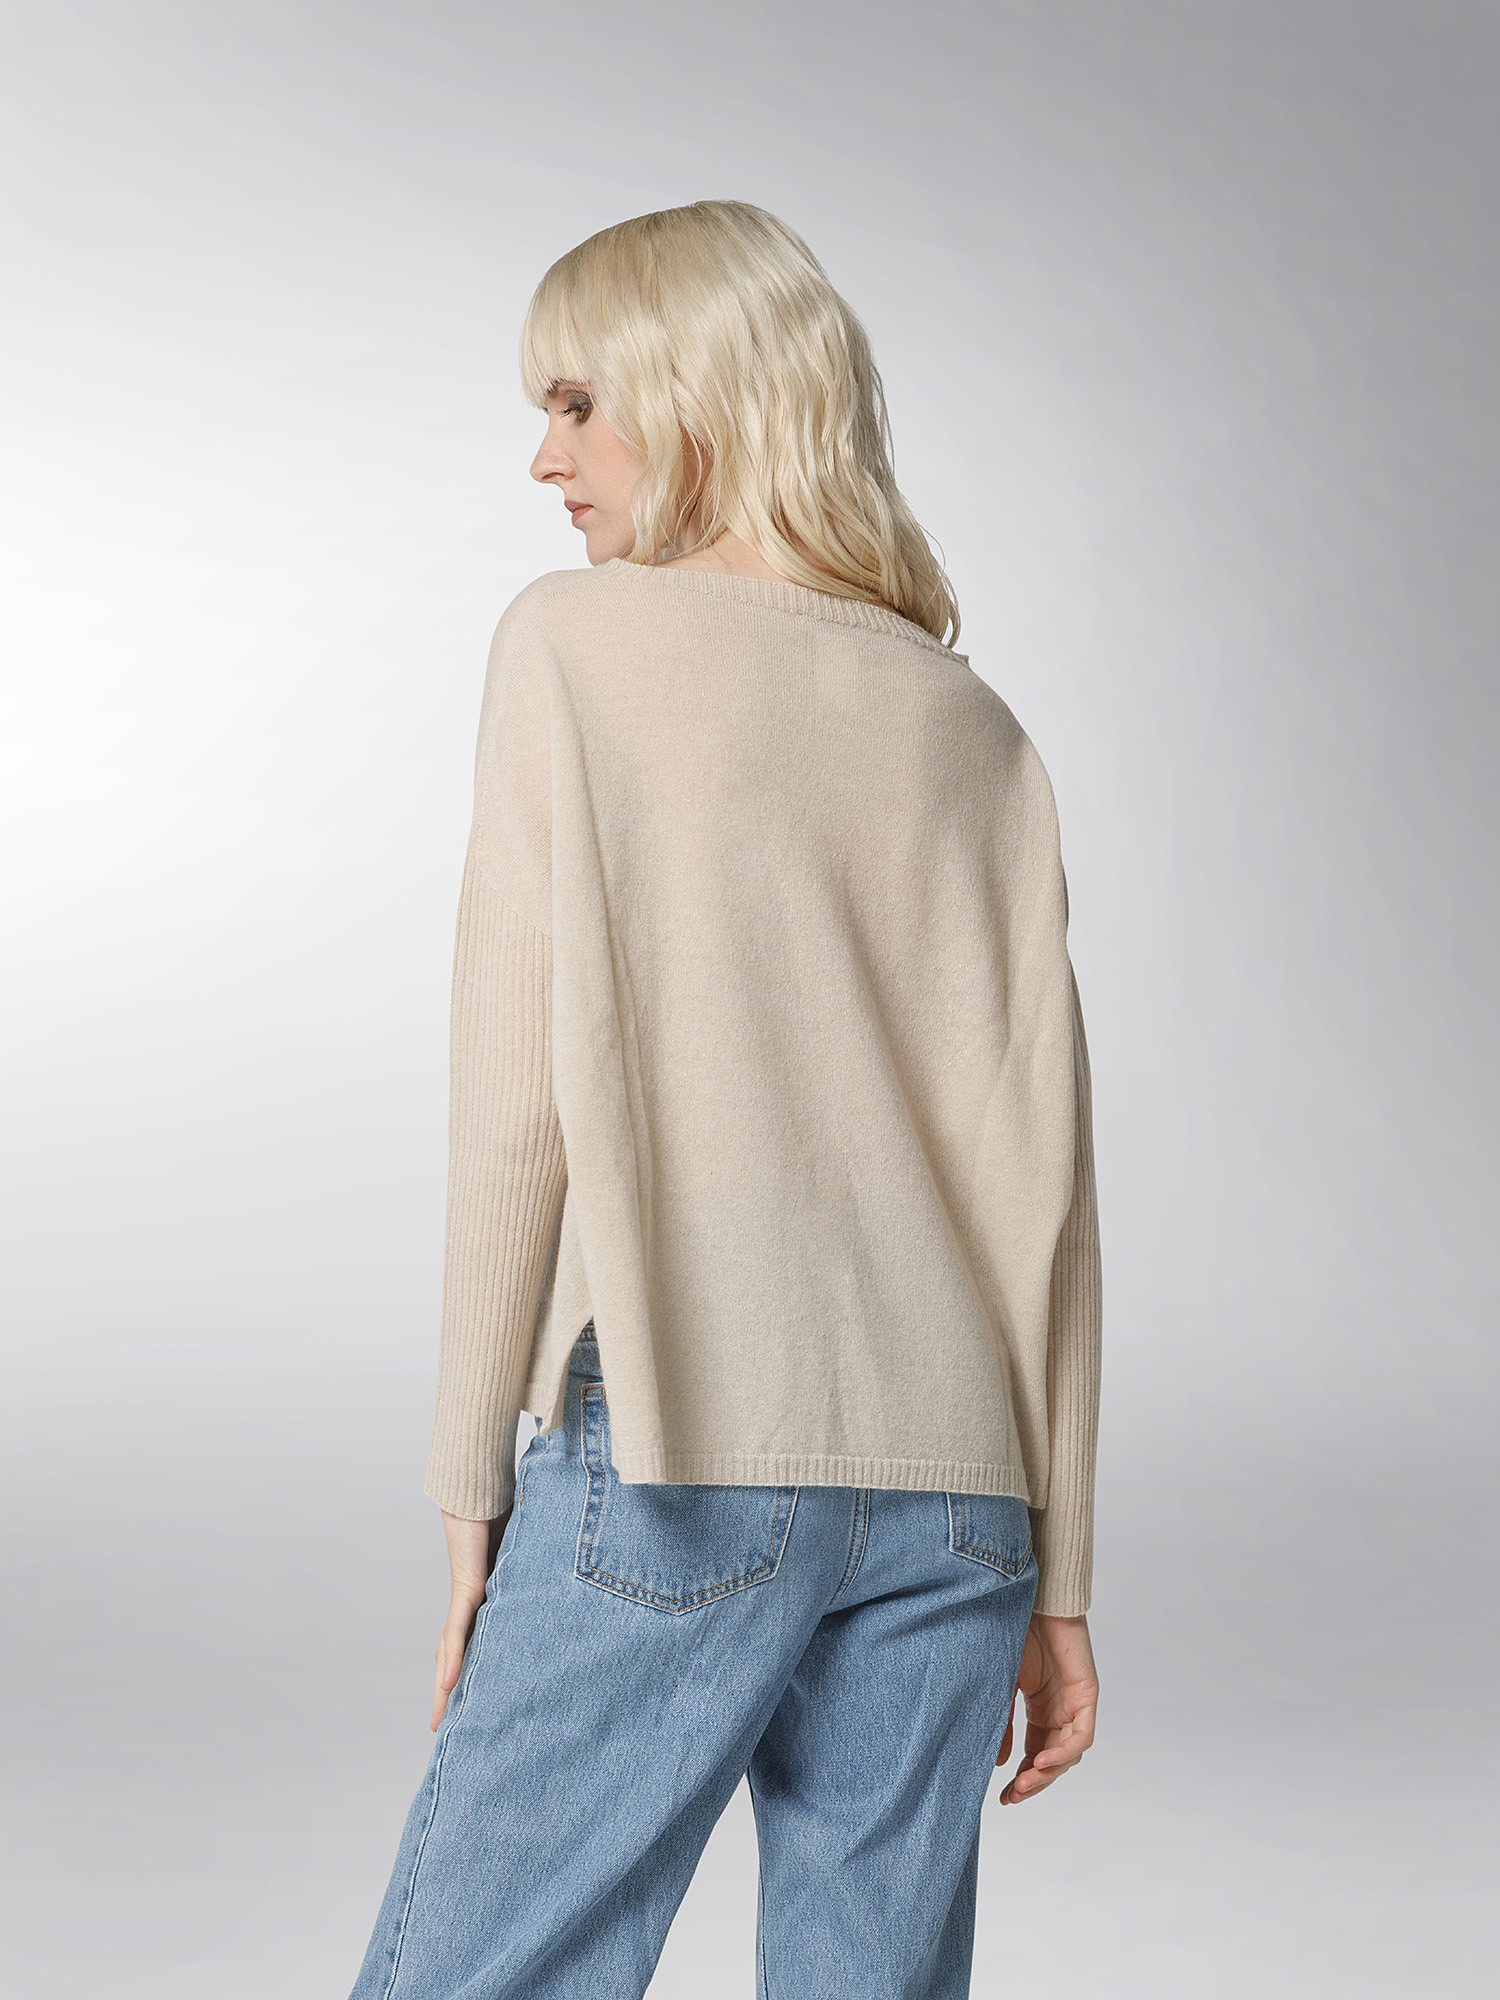 K Collection - Crewneck sweater, Beige, large image number 4